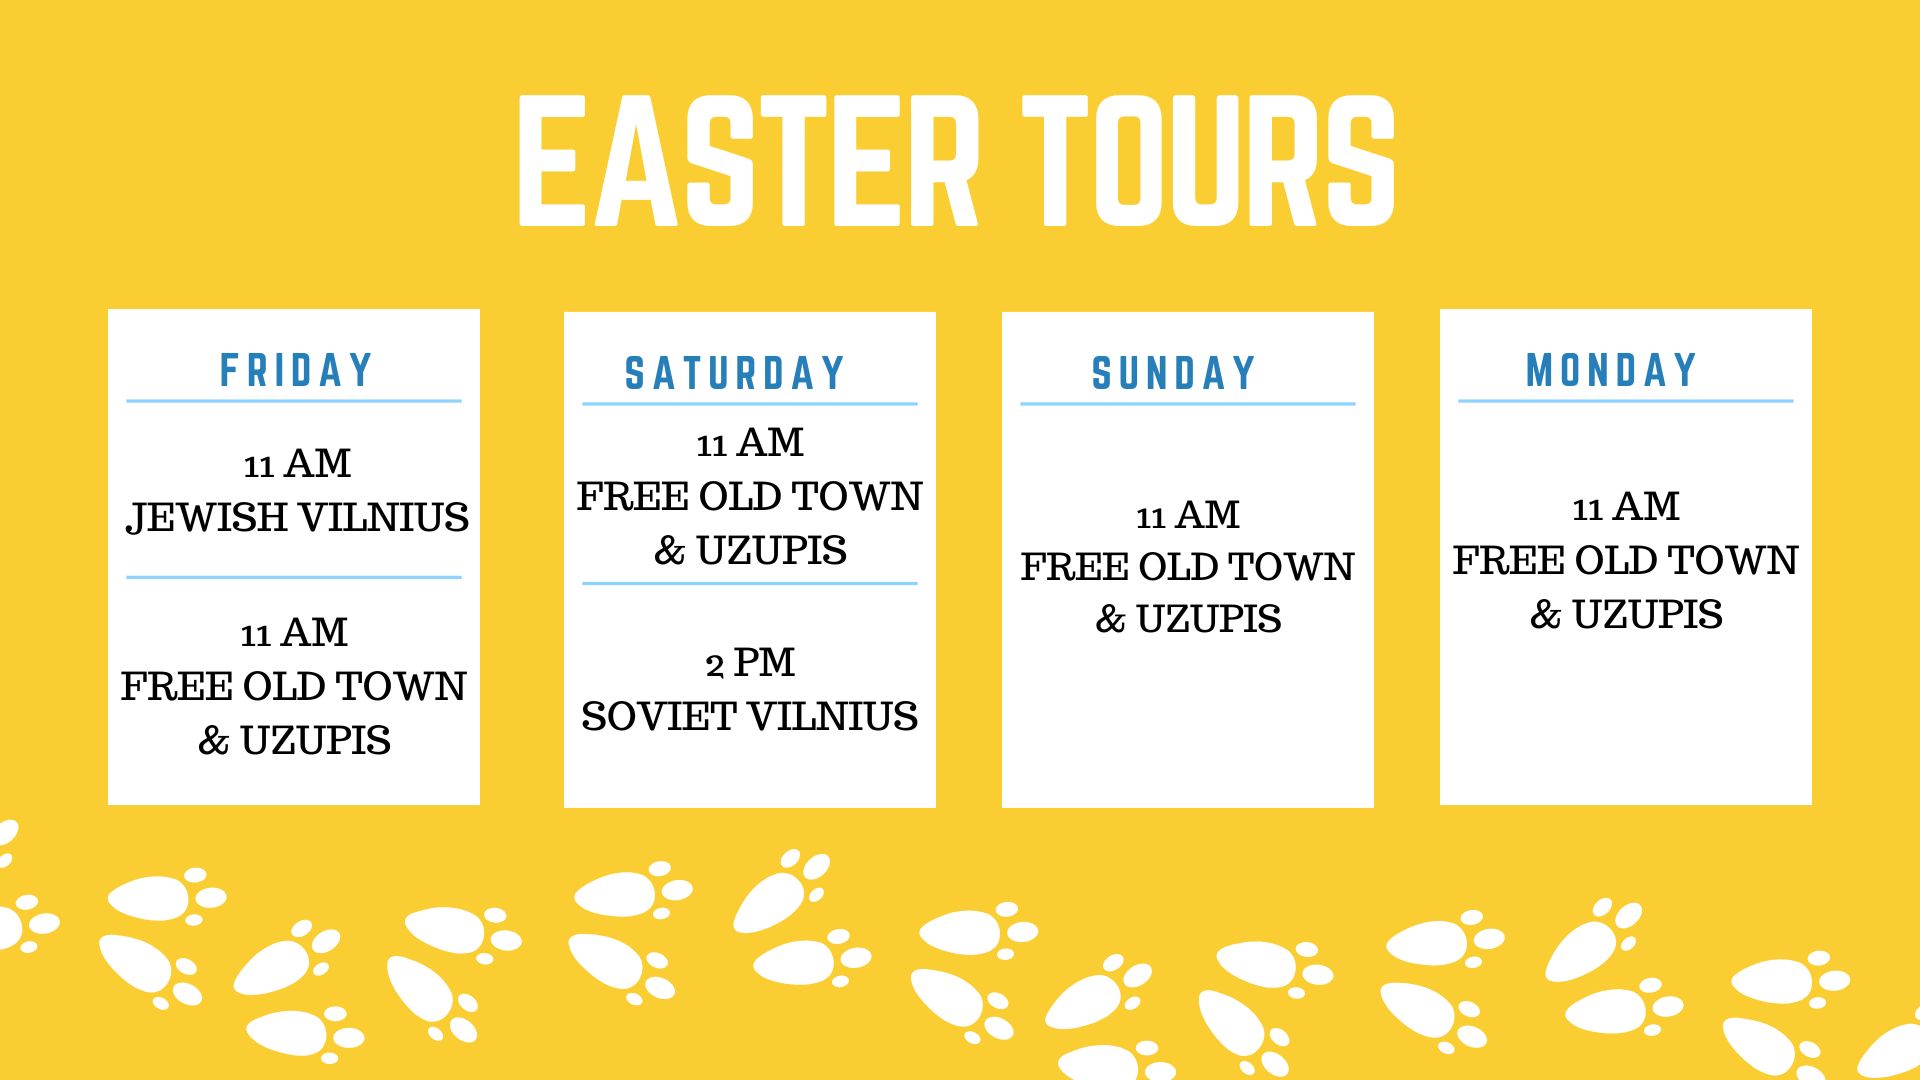 vilnius walking tour schedule Easter weekend